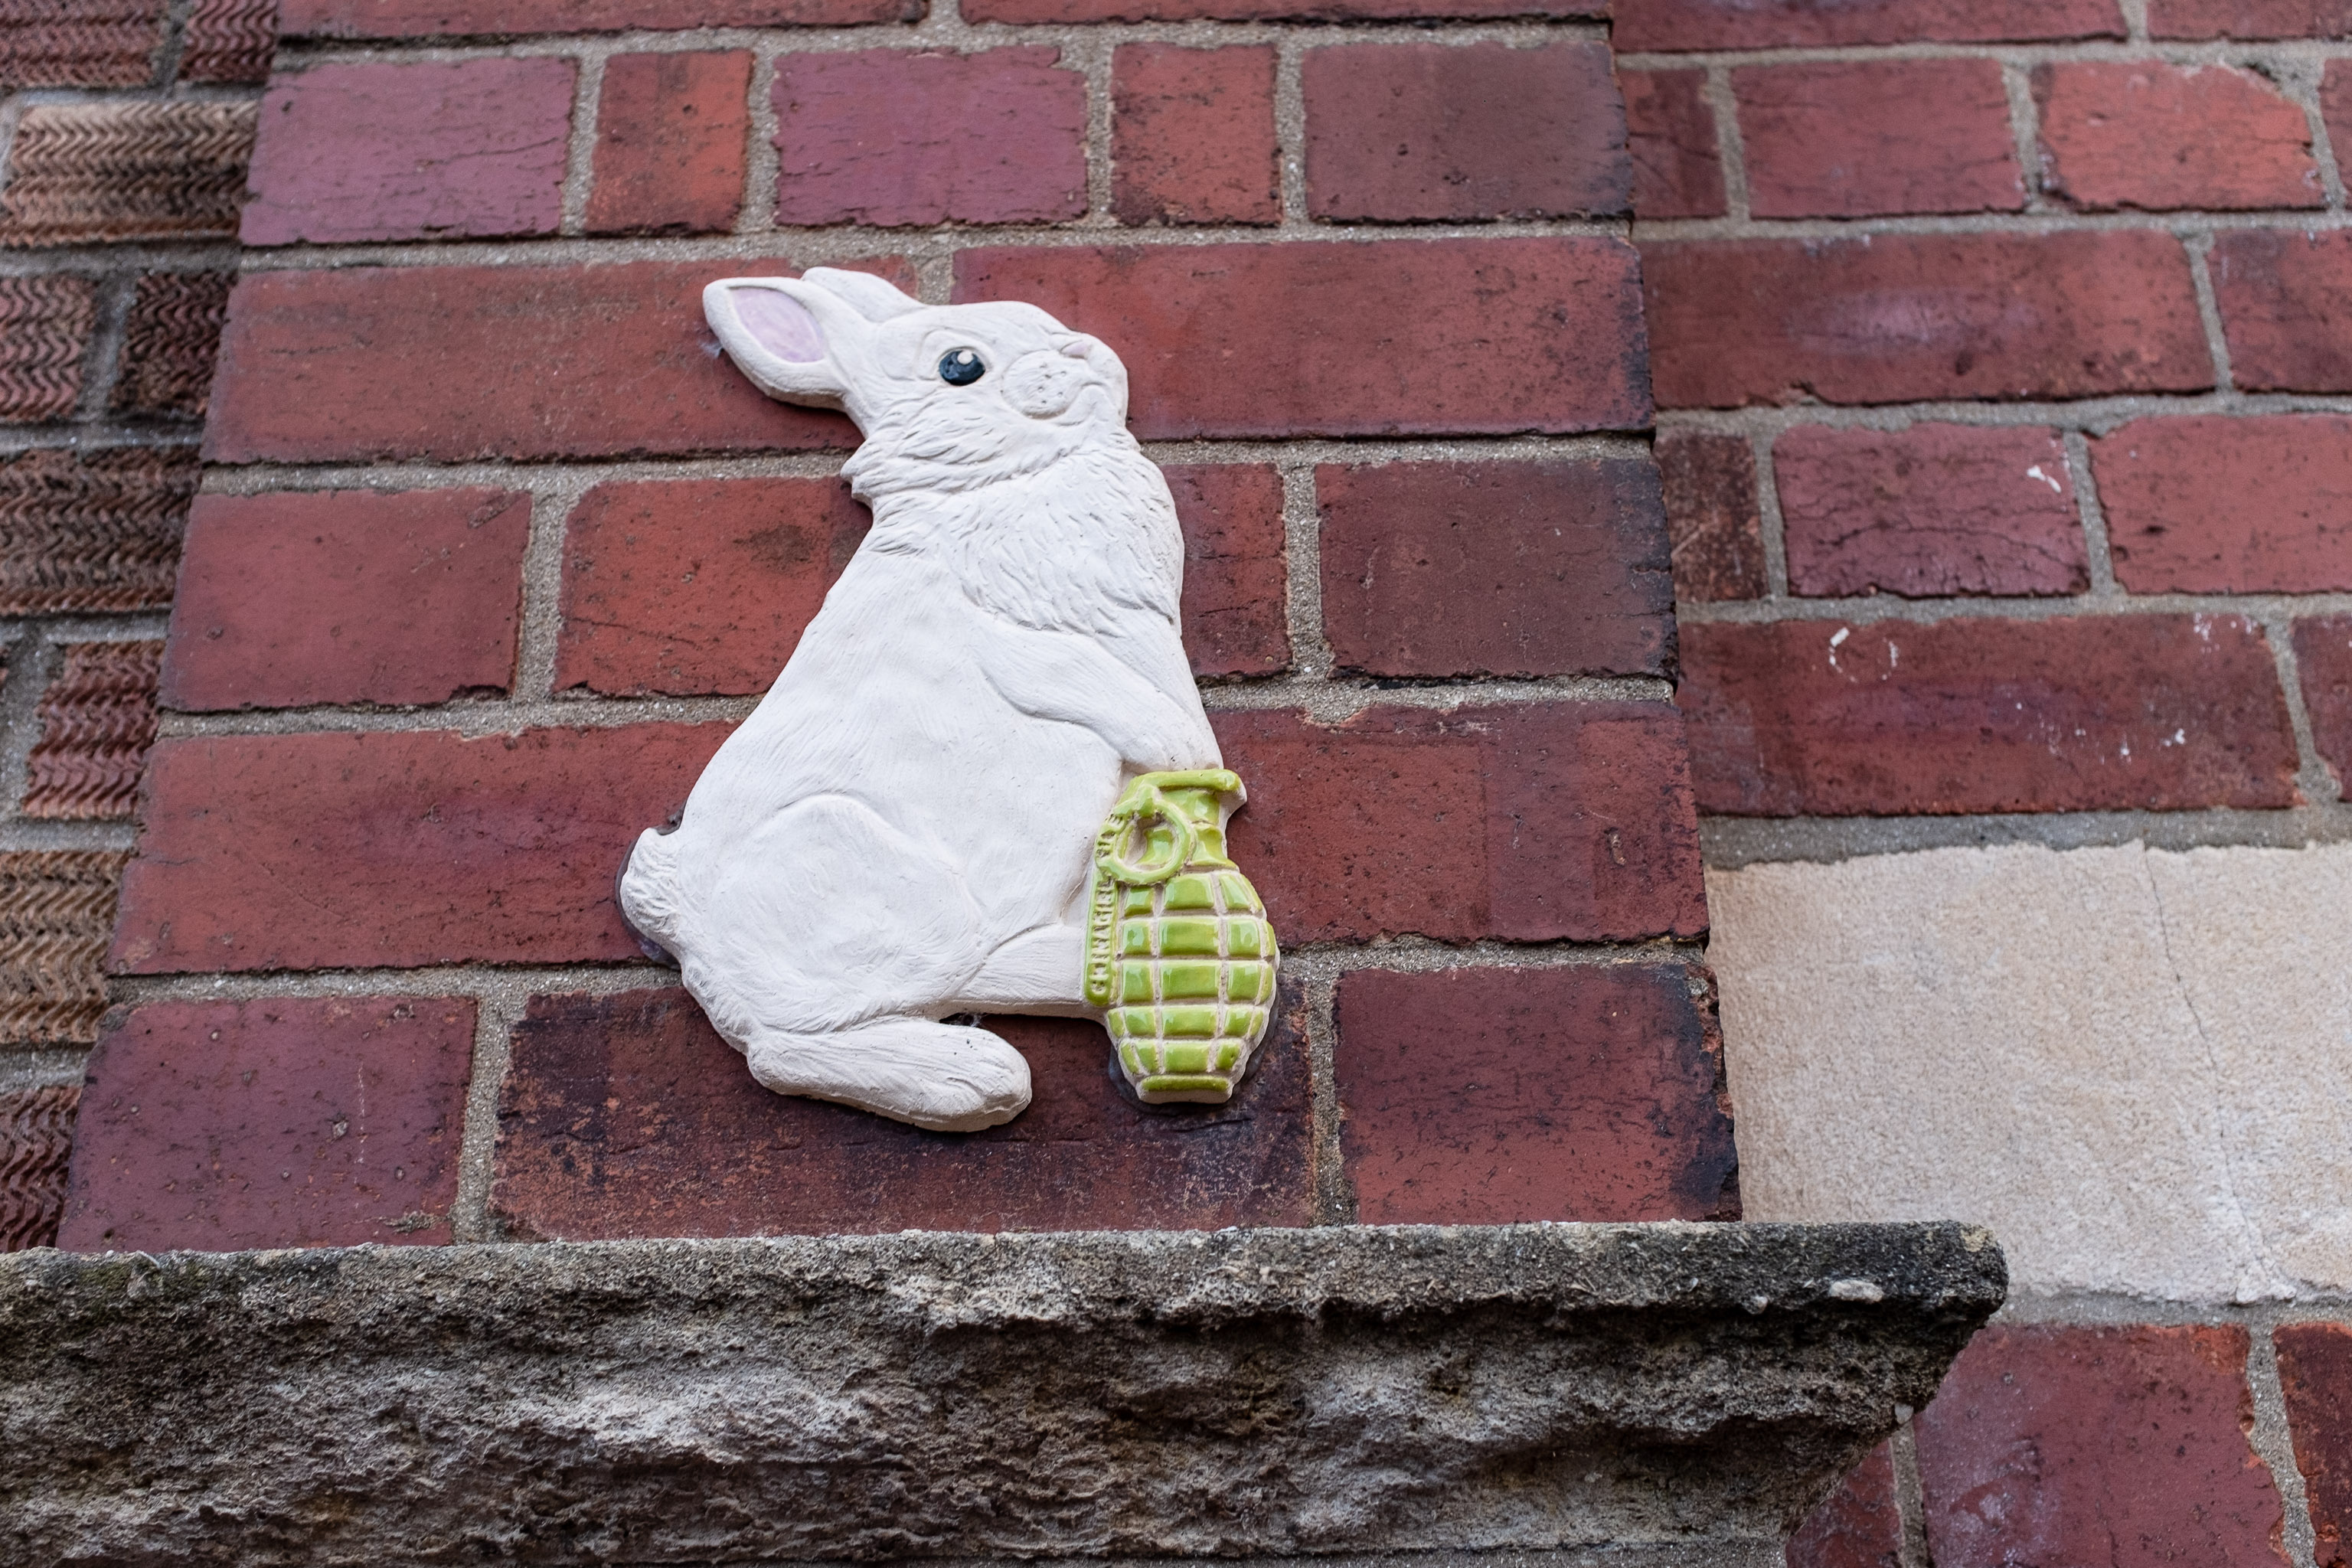 Grenade Bunny
By Chinagirl Tile
